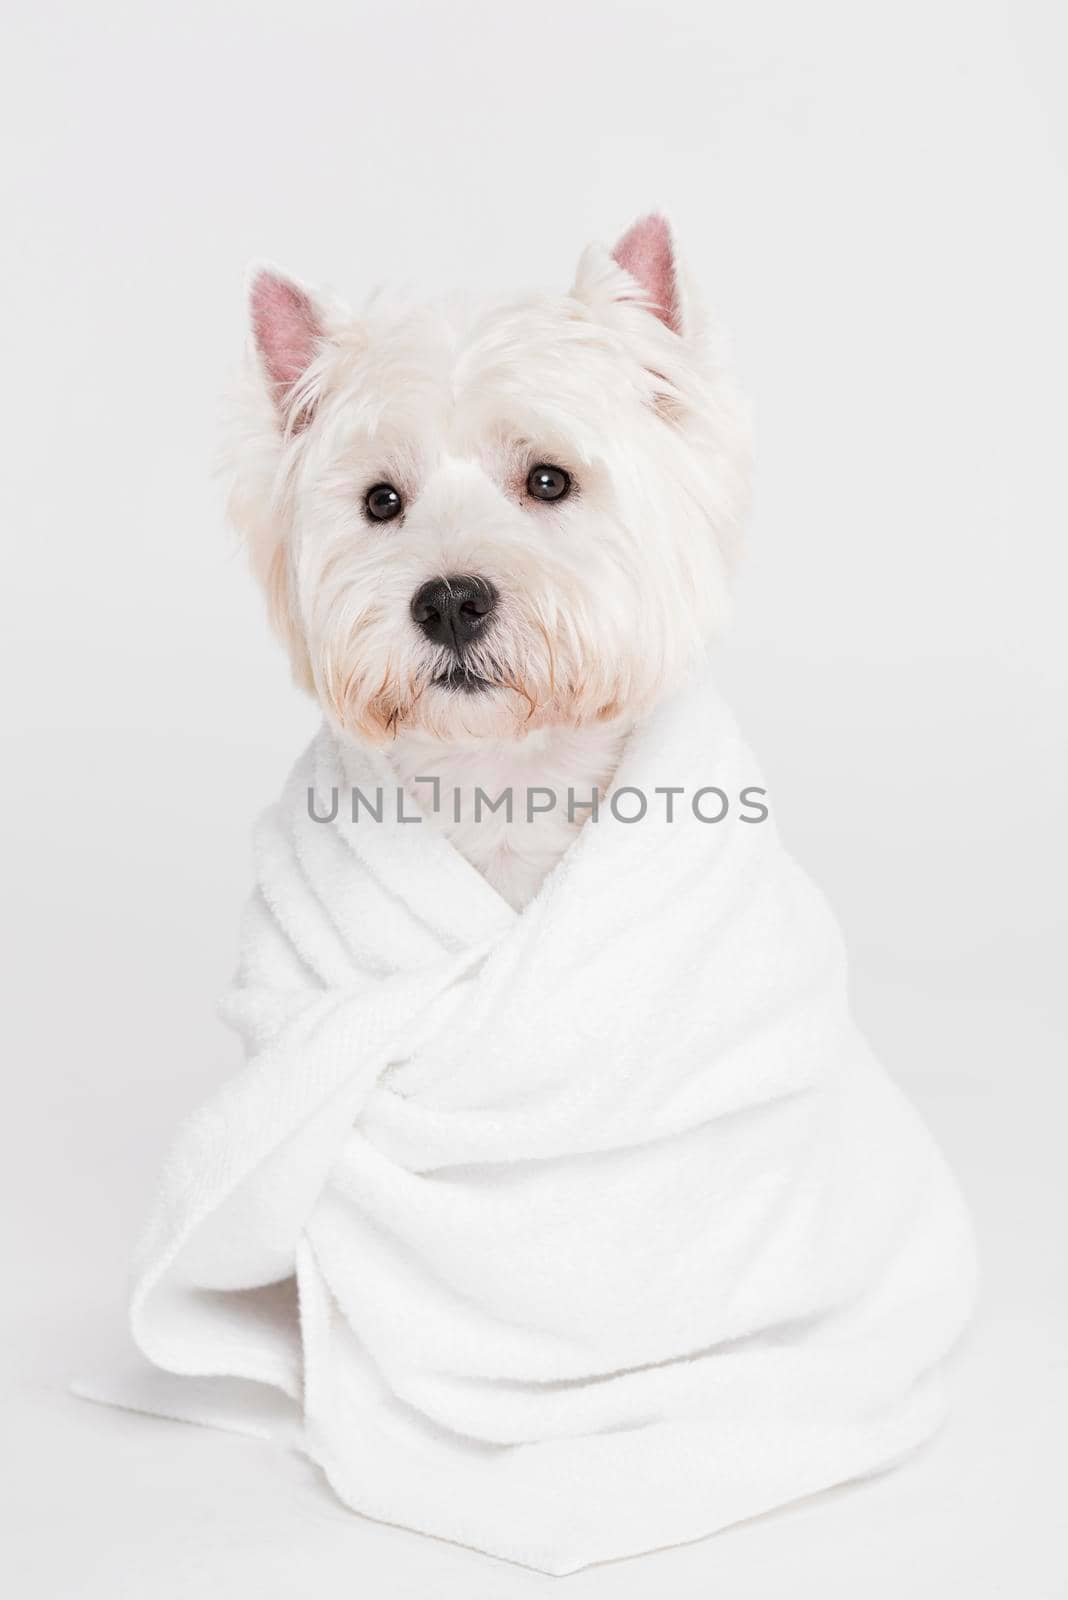 cute small dog sitting towel. High quality photo by Zahard